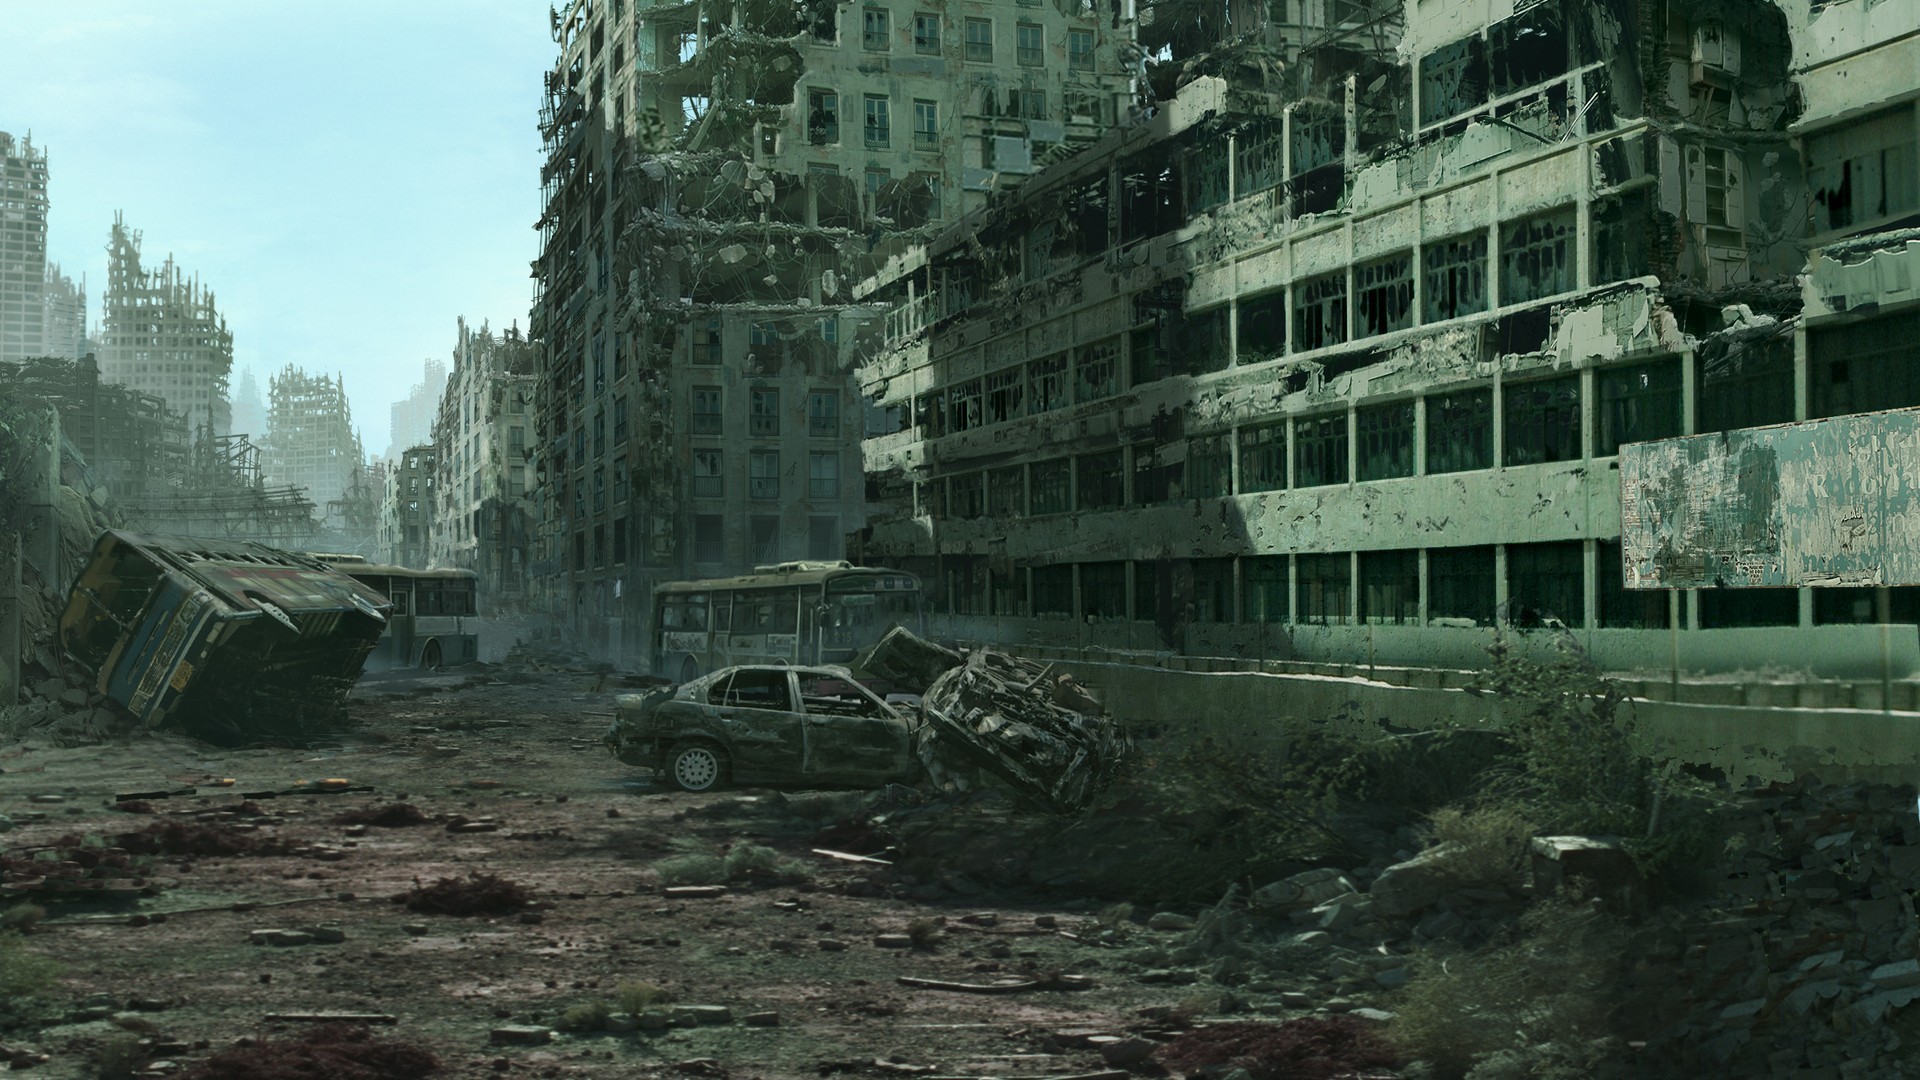 General 1920x1080 artwork digital art urban decay city building ruins apocalyptic car buses vehicle wreck abandoned